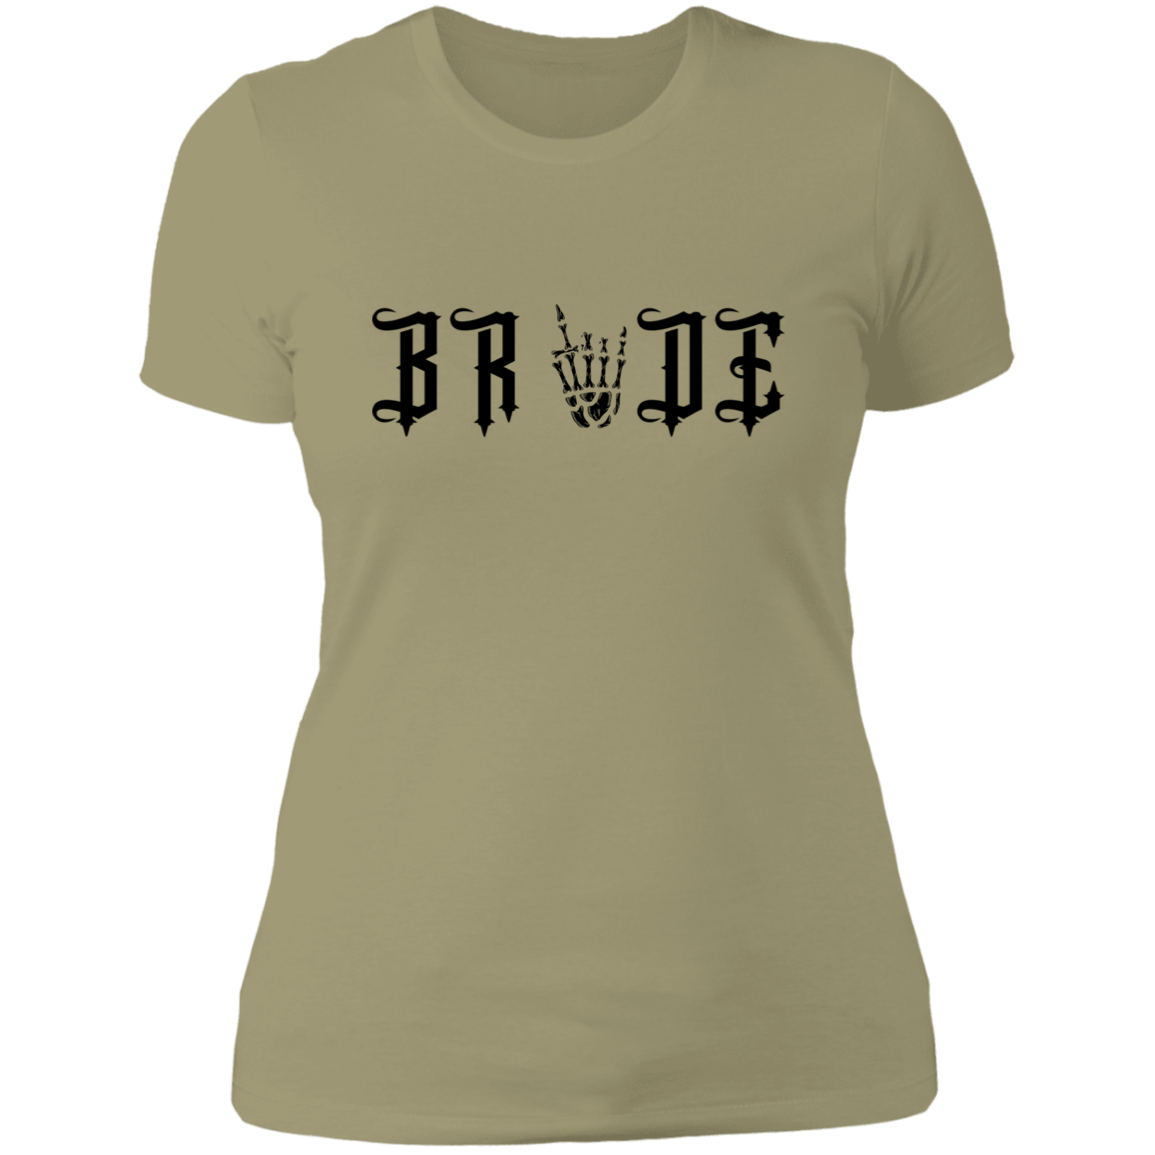 Bride with skull Ladies T-shirt, Wedding , Wedding Attire, Gift for Her